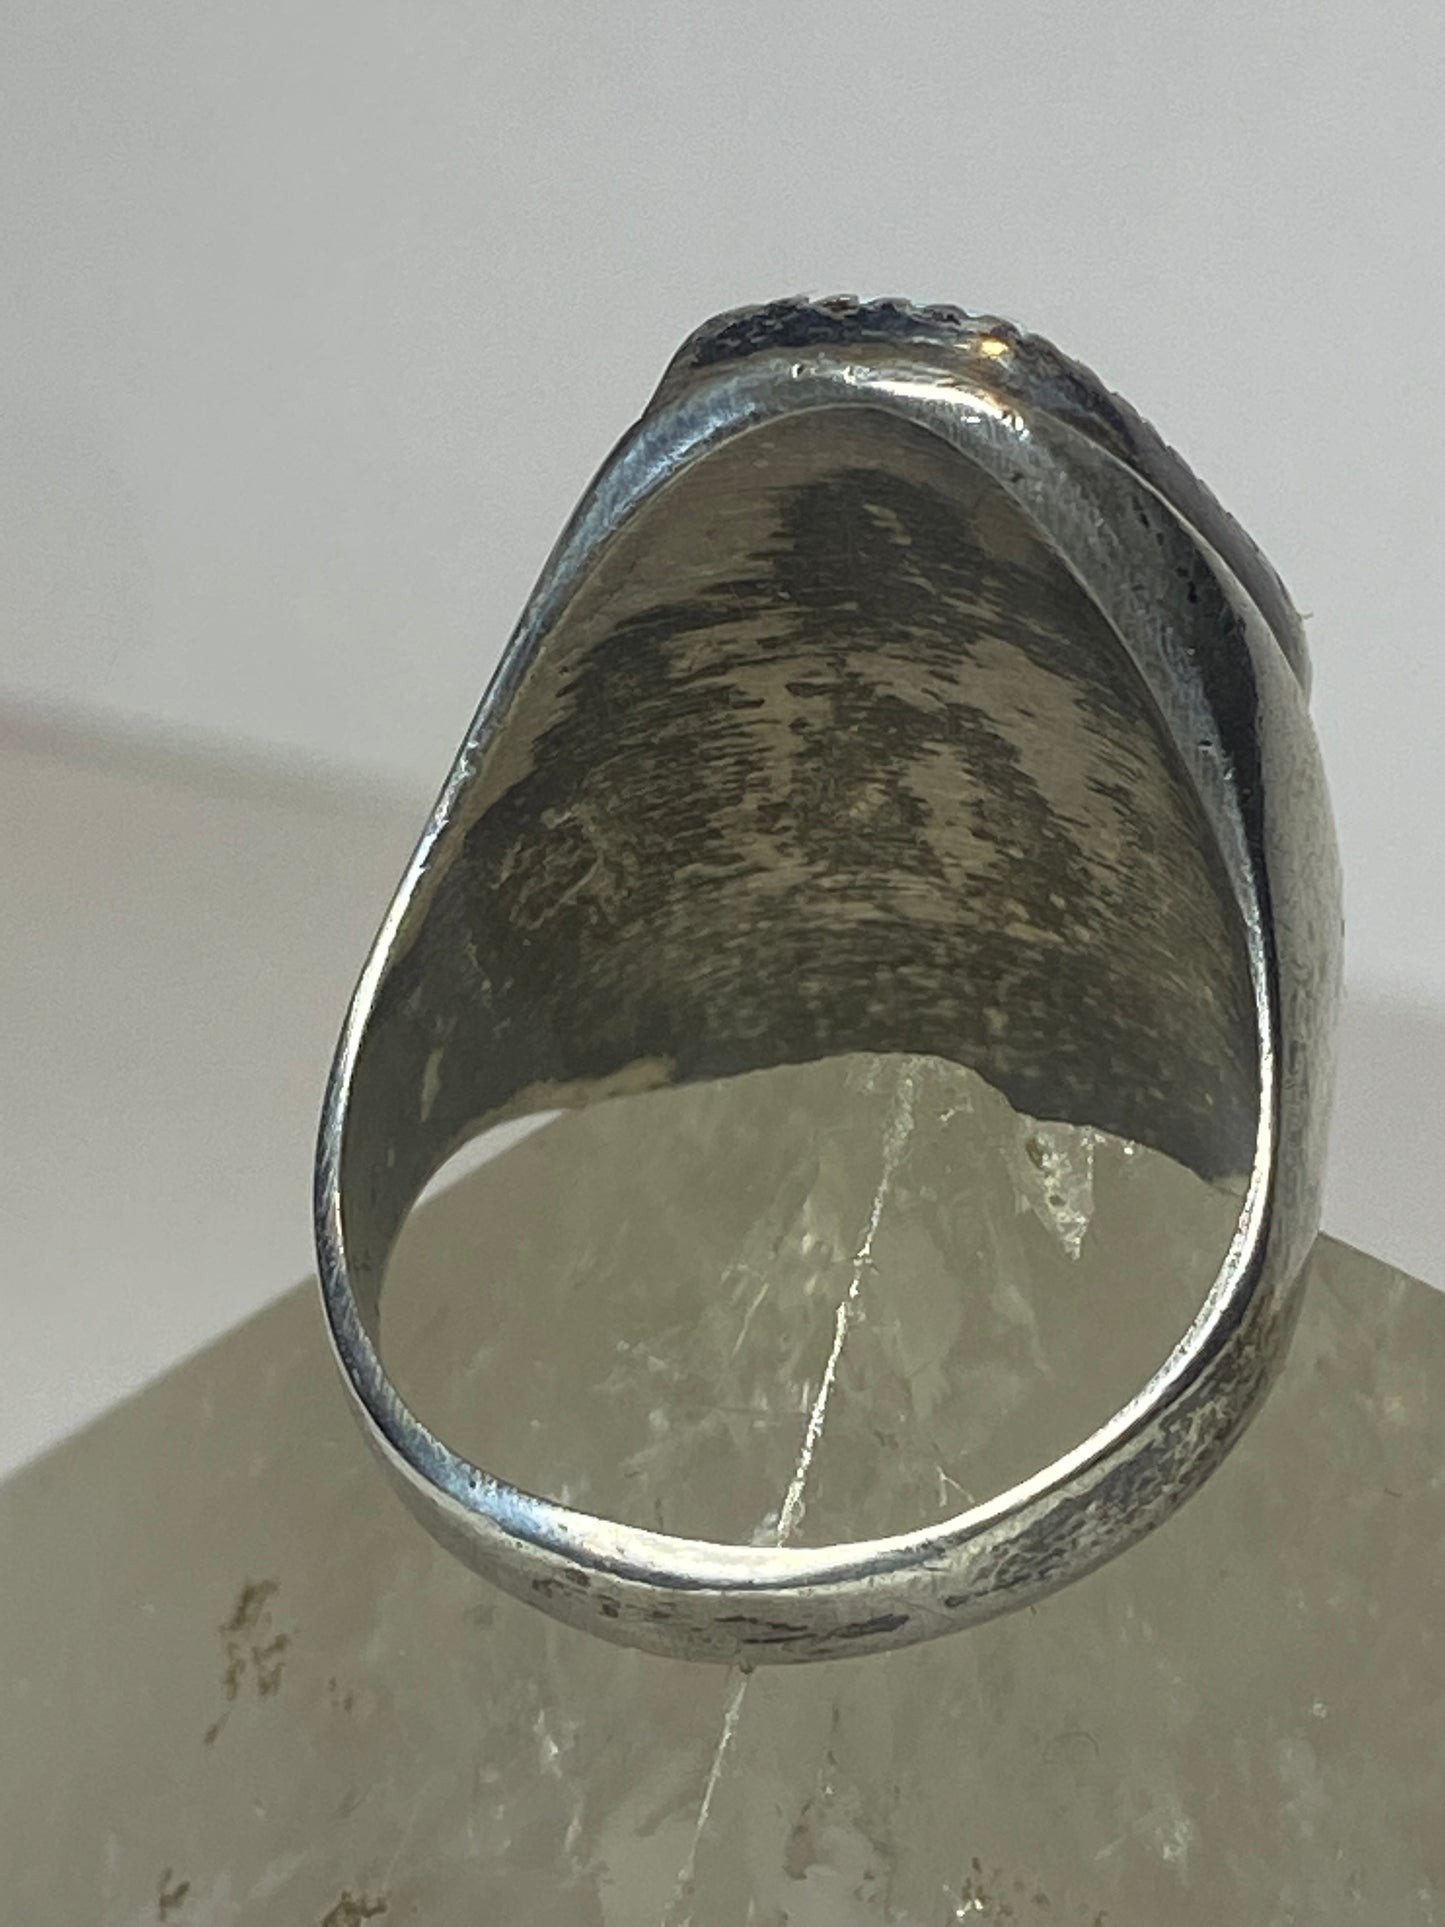 Turquoise ring southwest sterling silver leaves women men